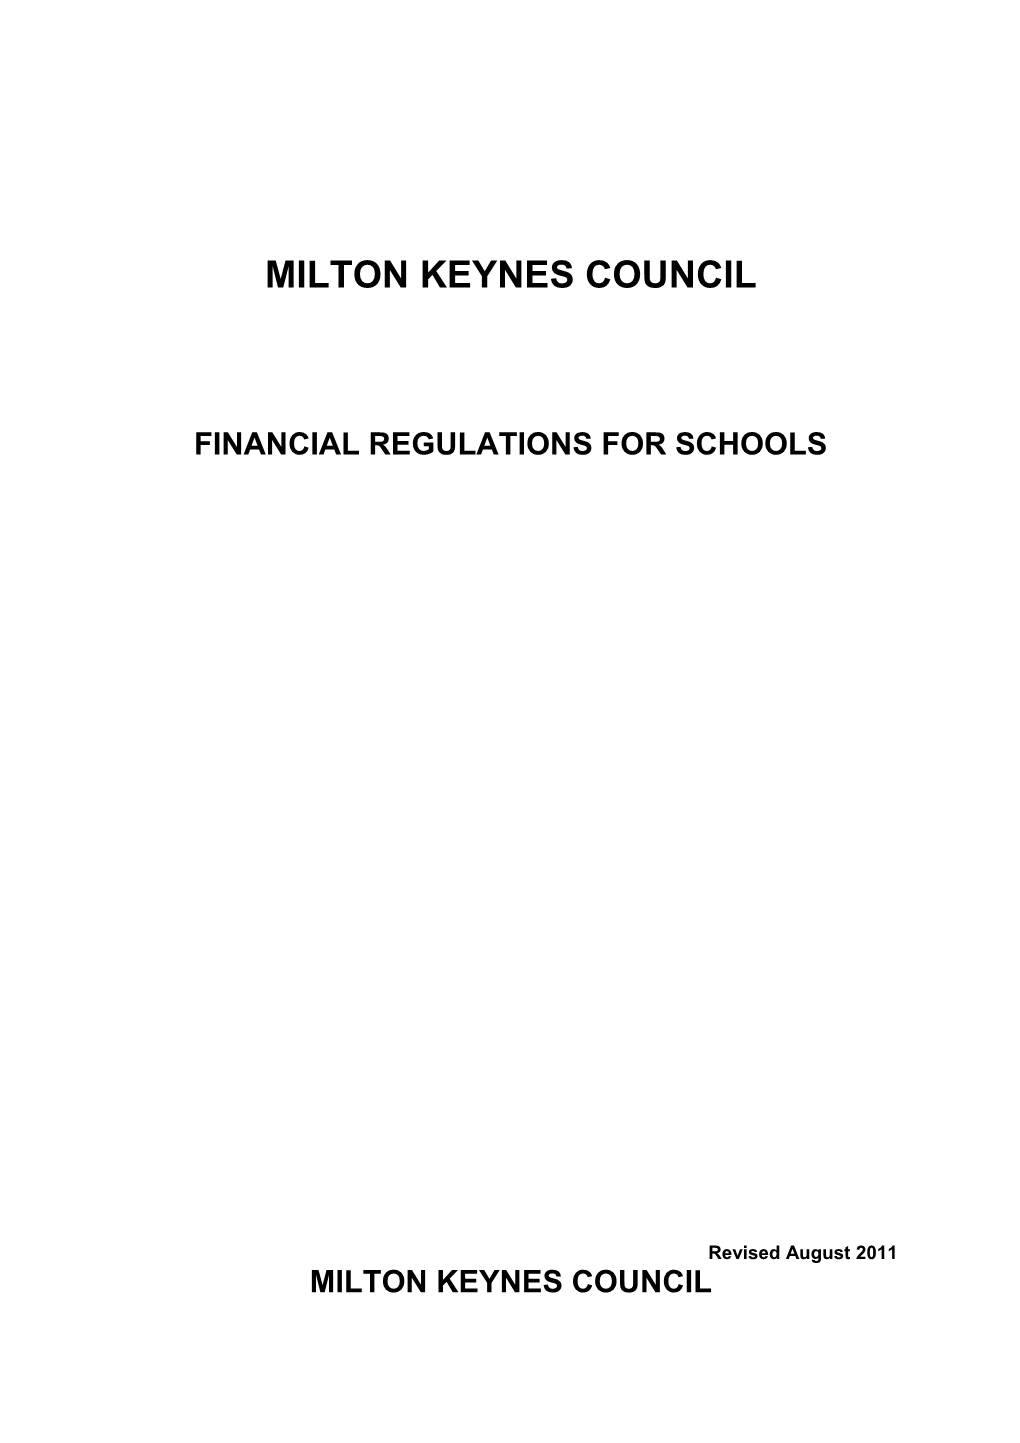 Financial Regulations for Schools